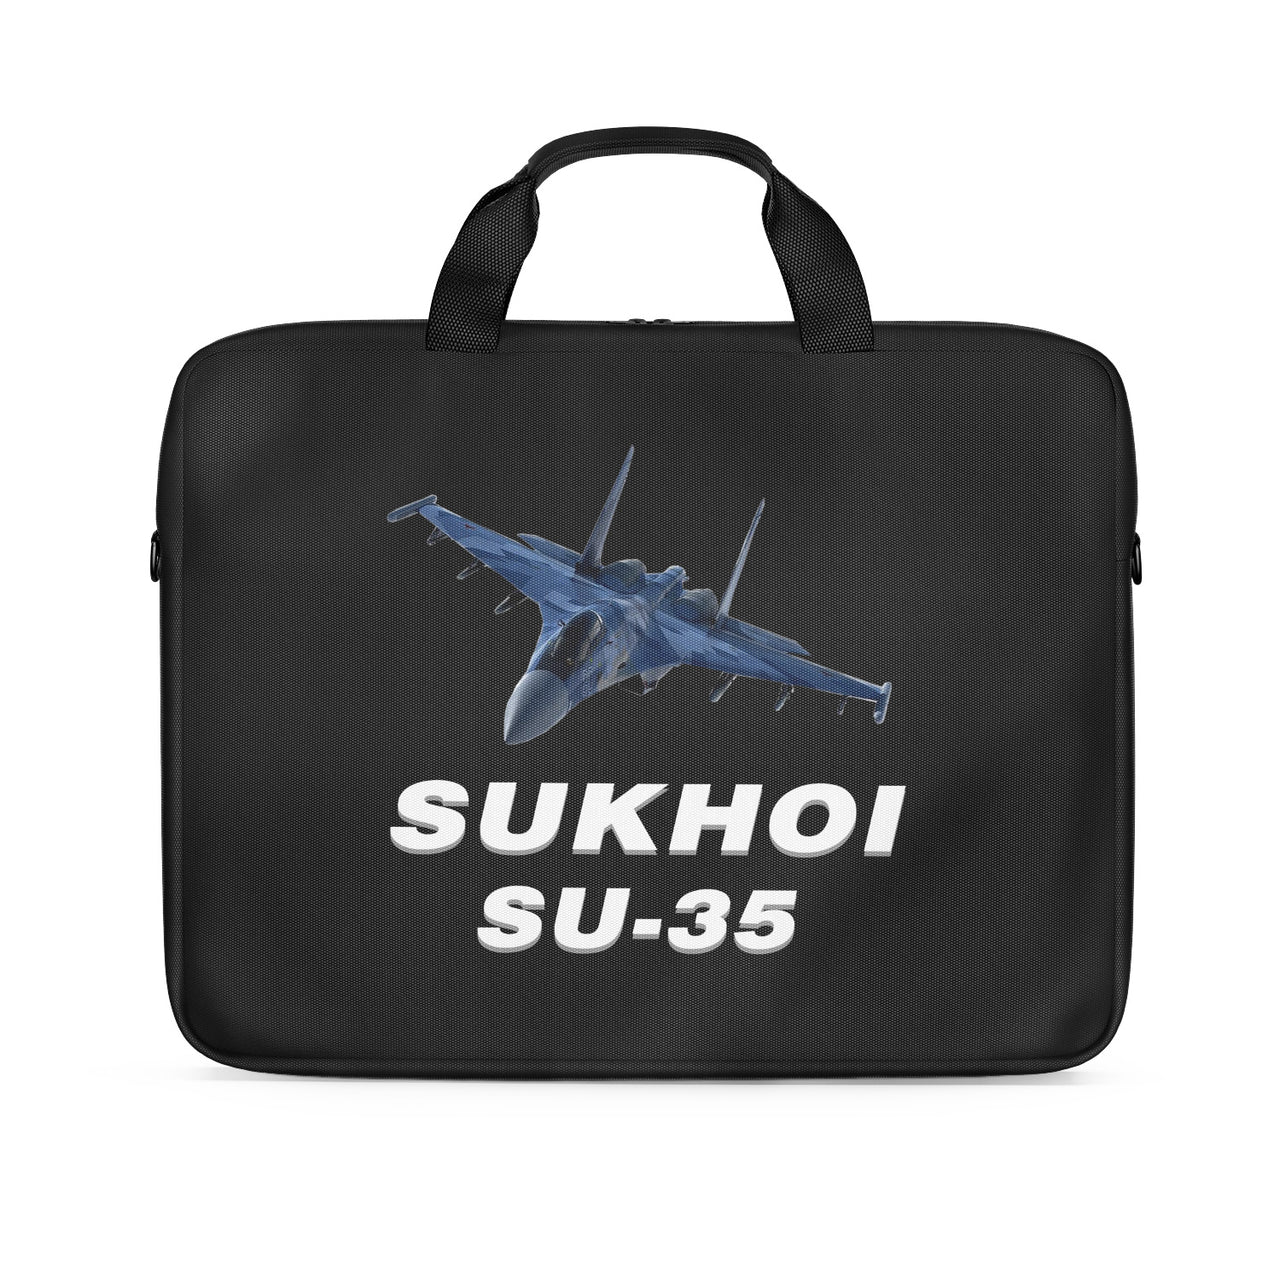 The Sukhoi SU-35 Designed Laptop & Tablet Bags